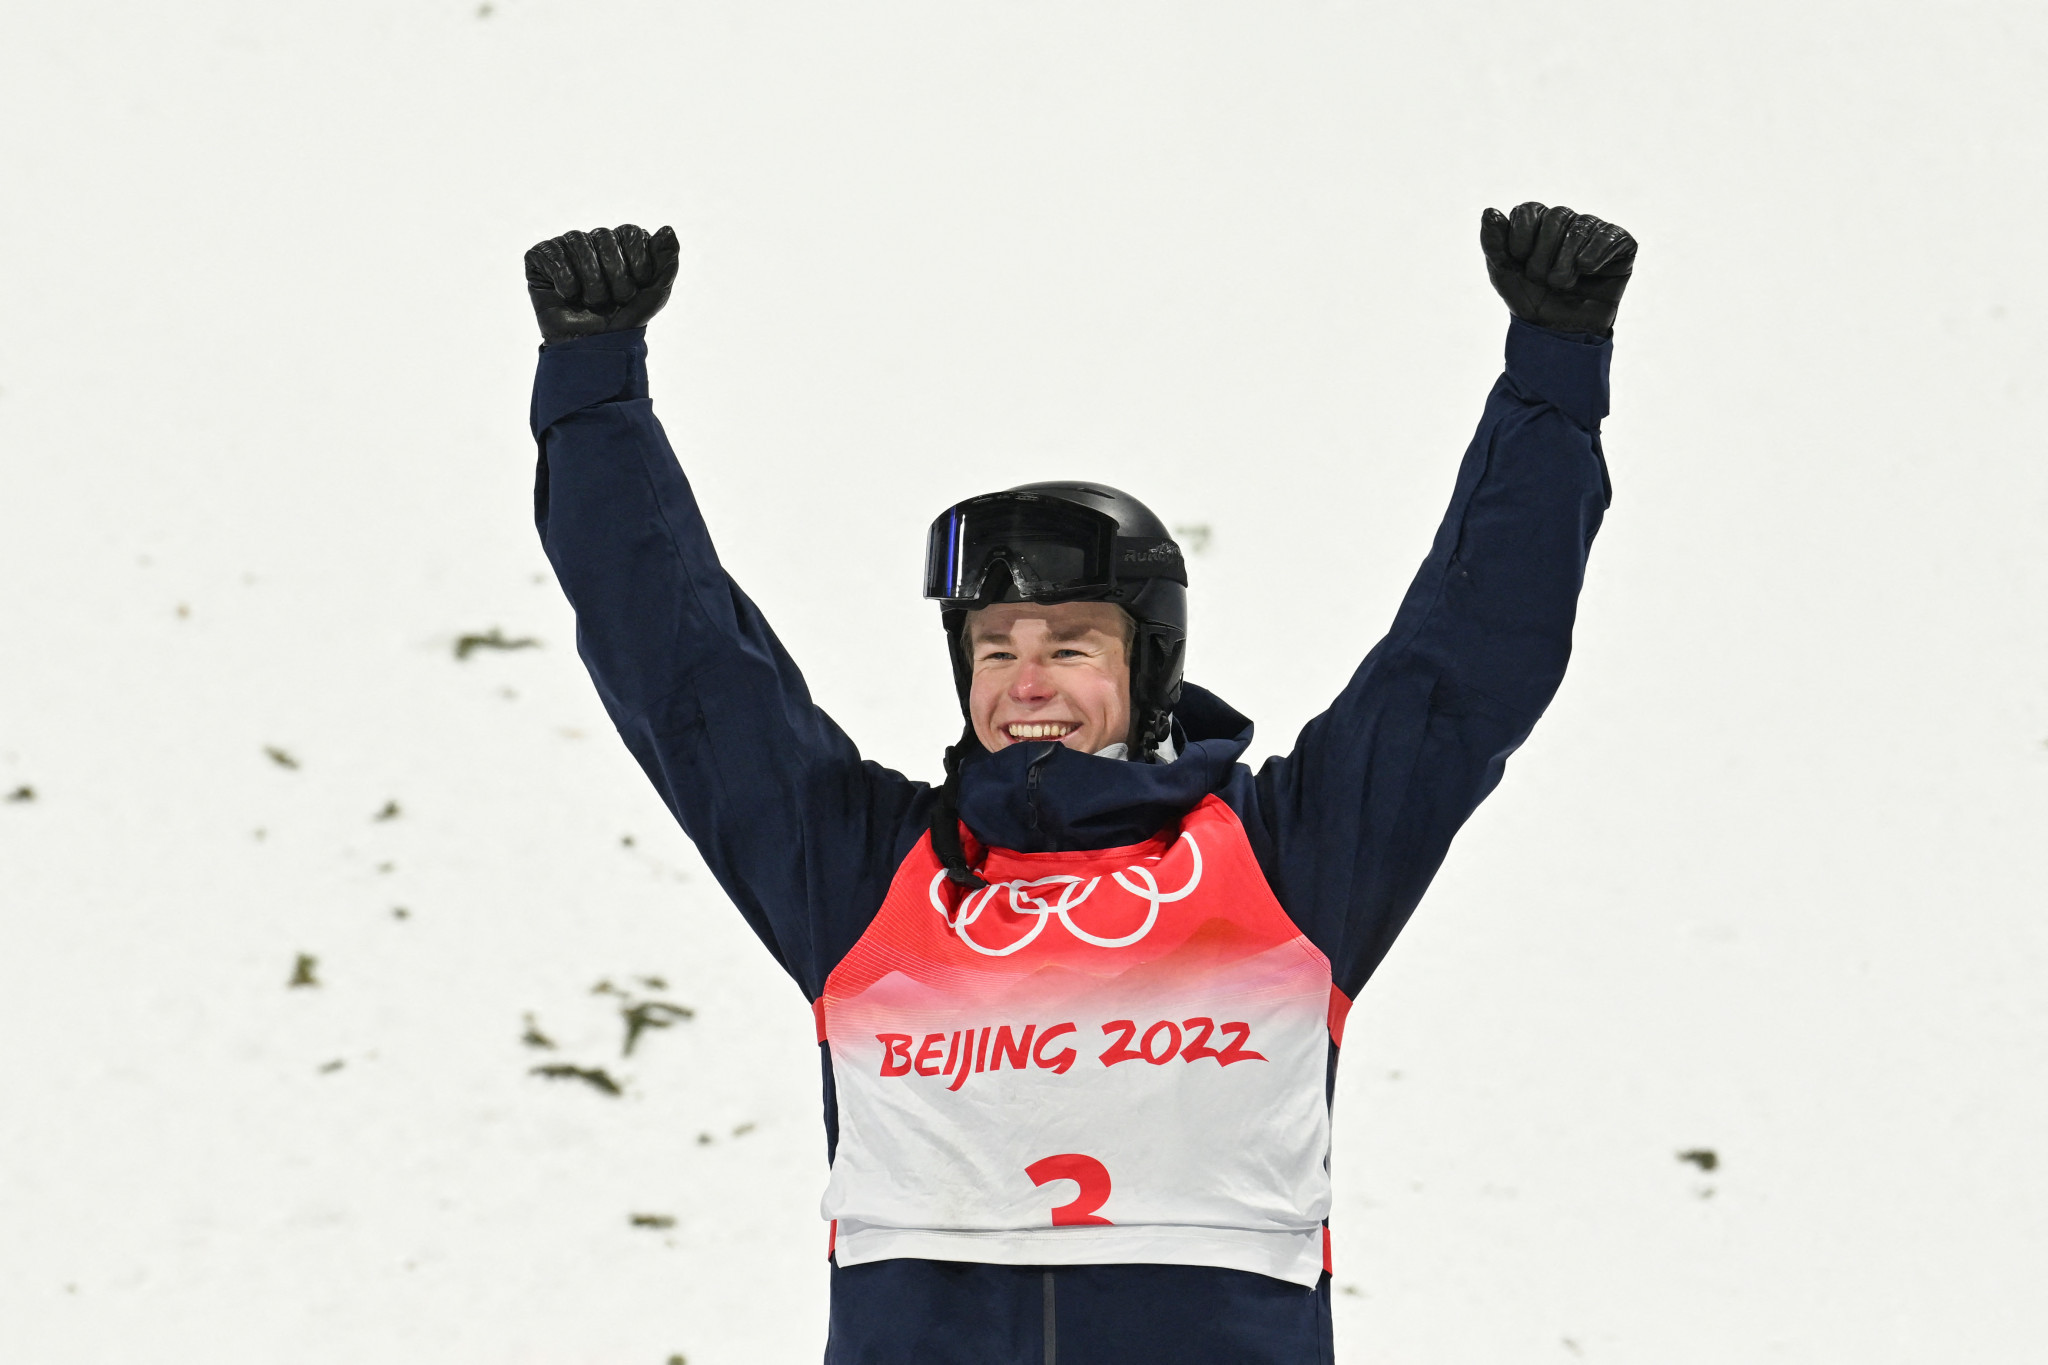 Sweden's Wallberg beats Kingsbury to win men's moguls title at Beijing 2022 Winter Olympics